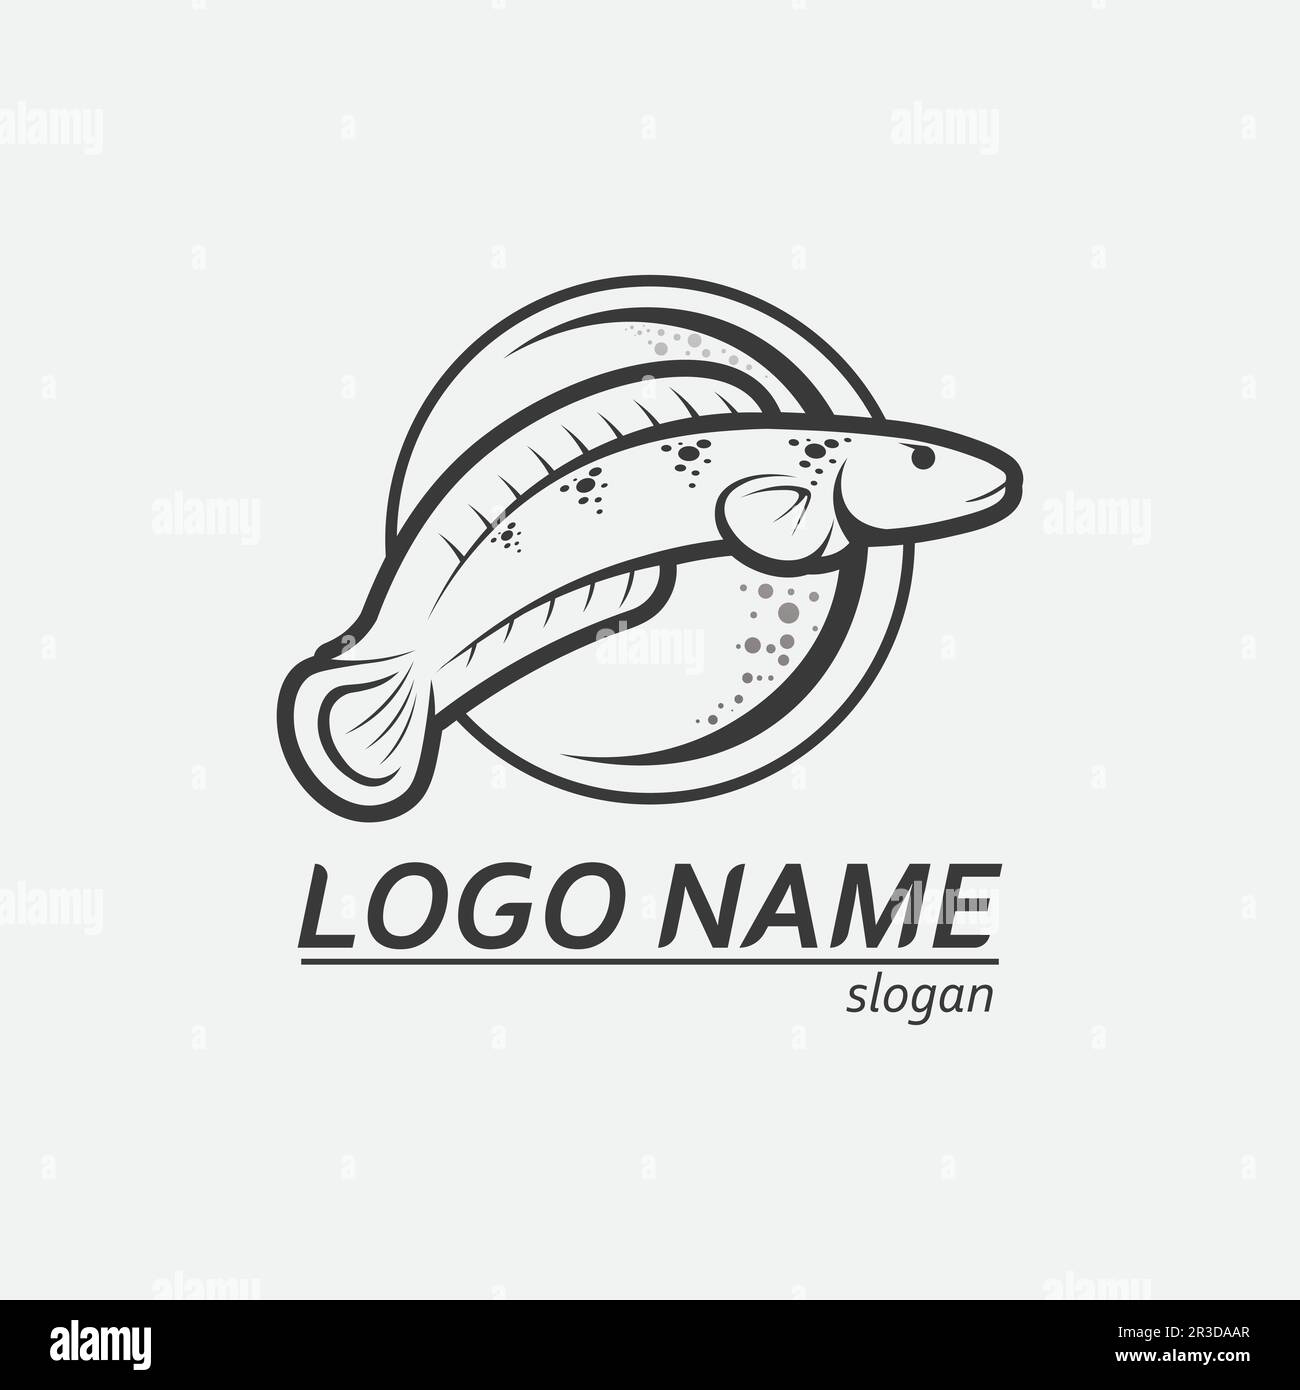 Channa Snakehead fish, Predator Fish, animal underwater design, logo, and illustration Stock Vector